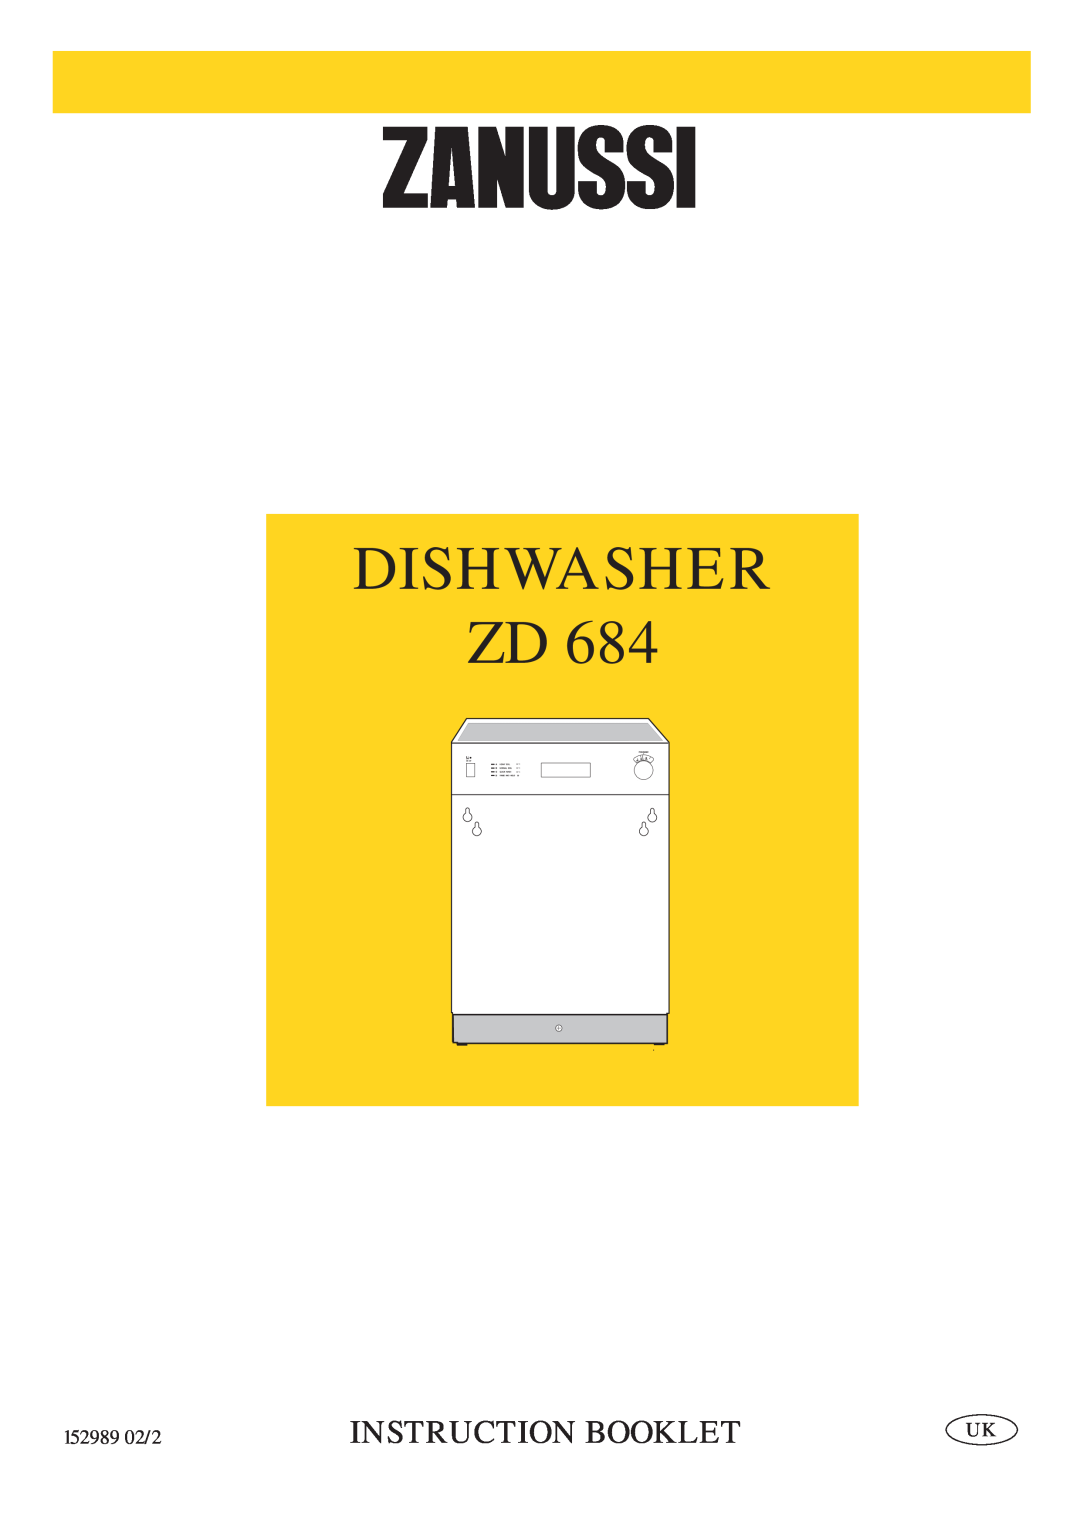 Zanussi ZD 684 manual Dishwasher Zd, Instruction Booklet, 152989 02/2 